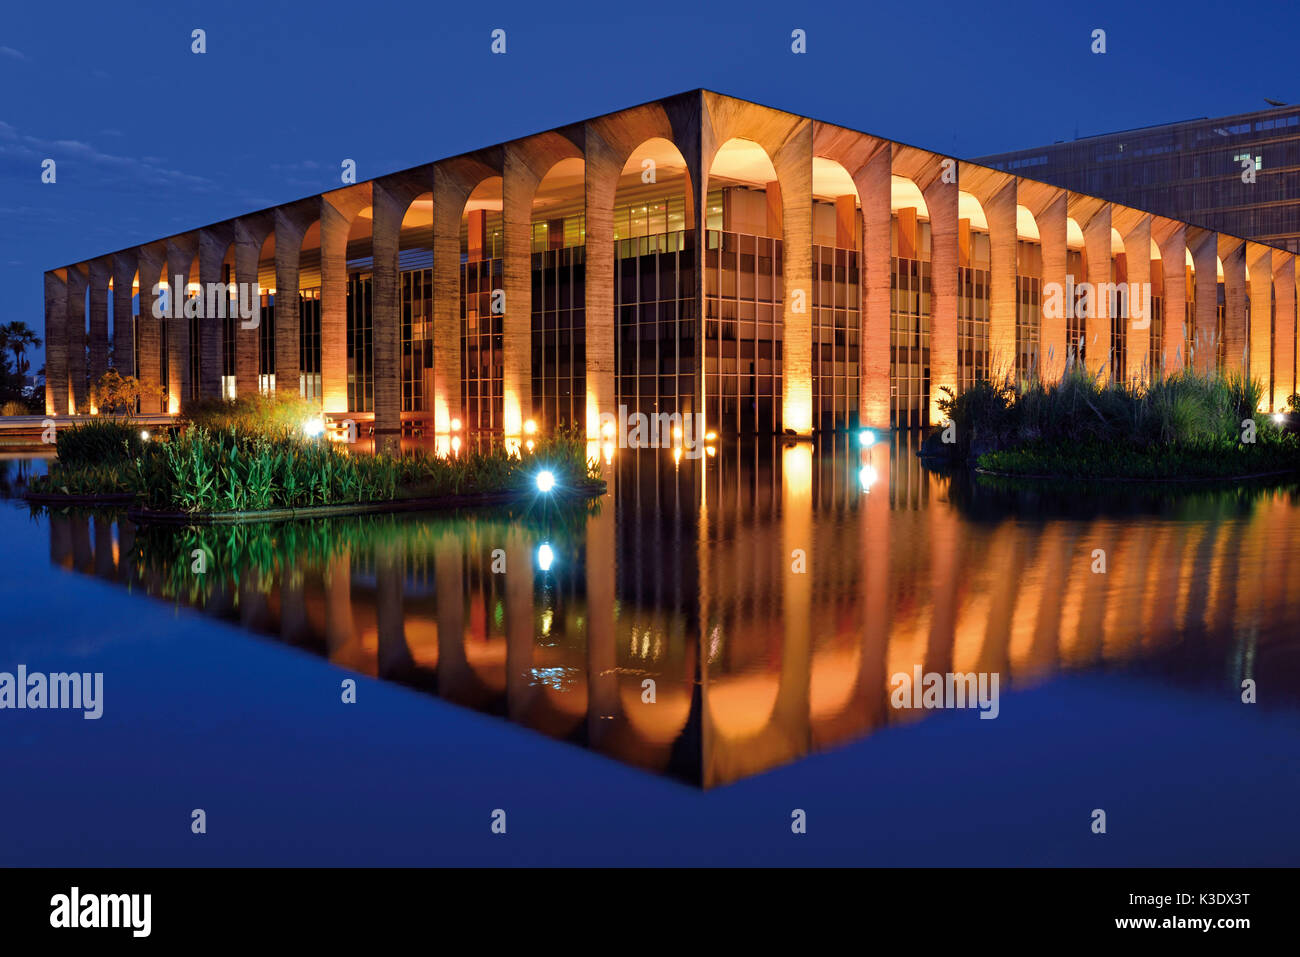 Brazil, Brazil, At night of illuminated Itamaraty palace of Oscar Niemeyer, Stock Photo